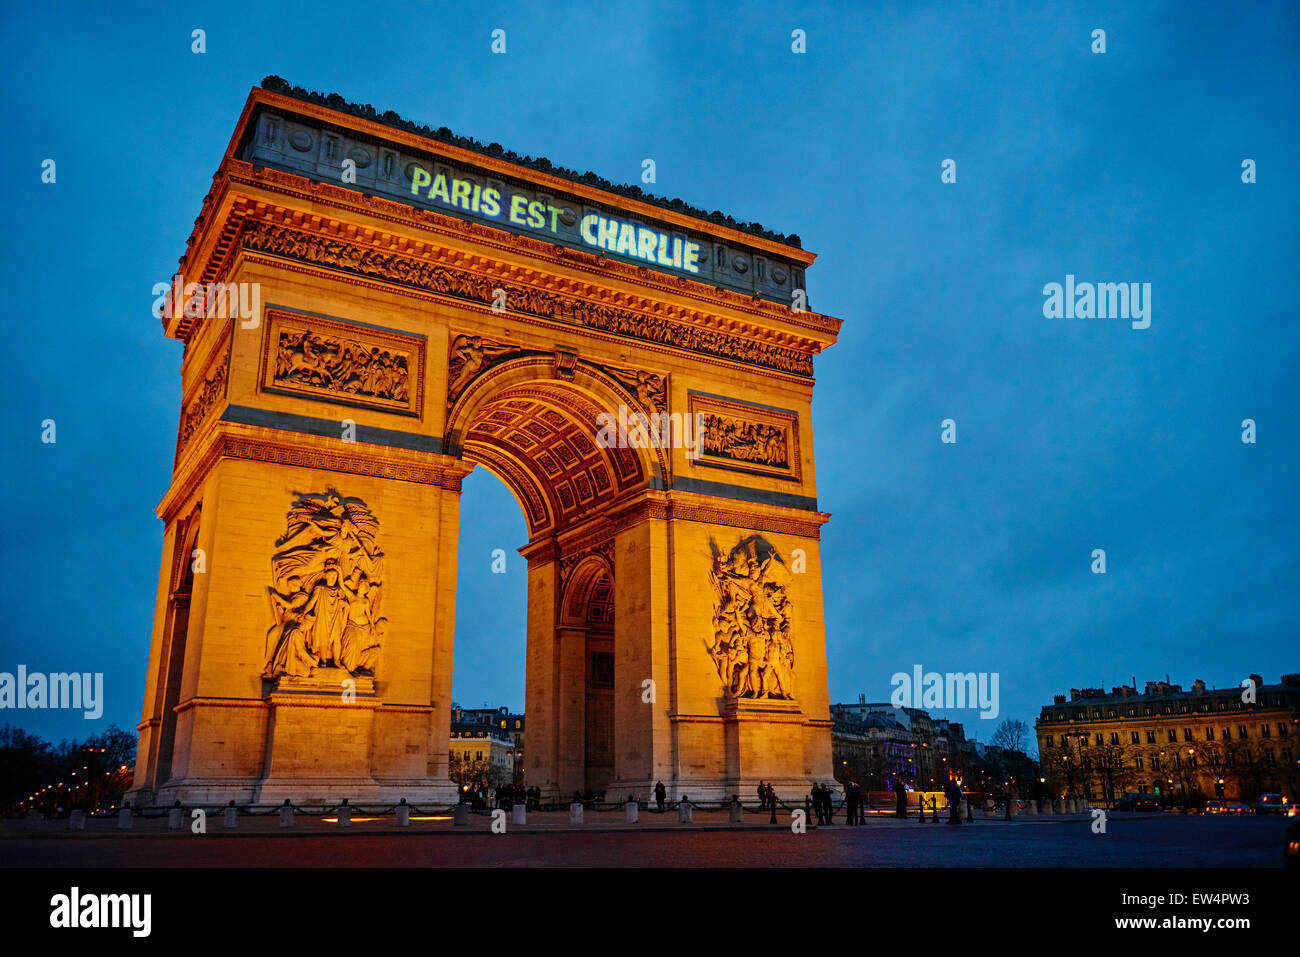 Frankreich, Paris, 11. Januar 2015 Paris ist Charlie für Charlie Hebdo, Arc de Triomphe Stockfoto